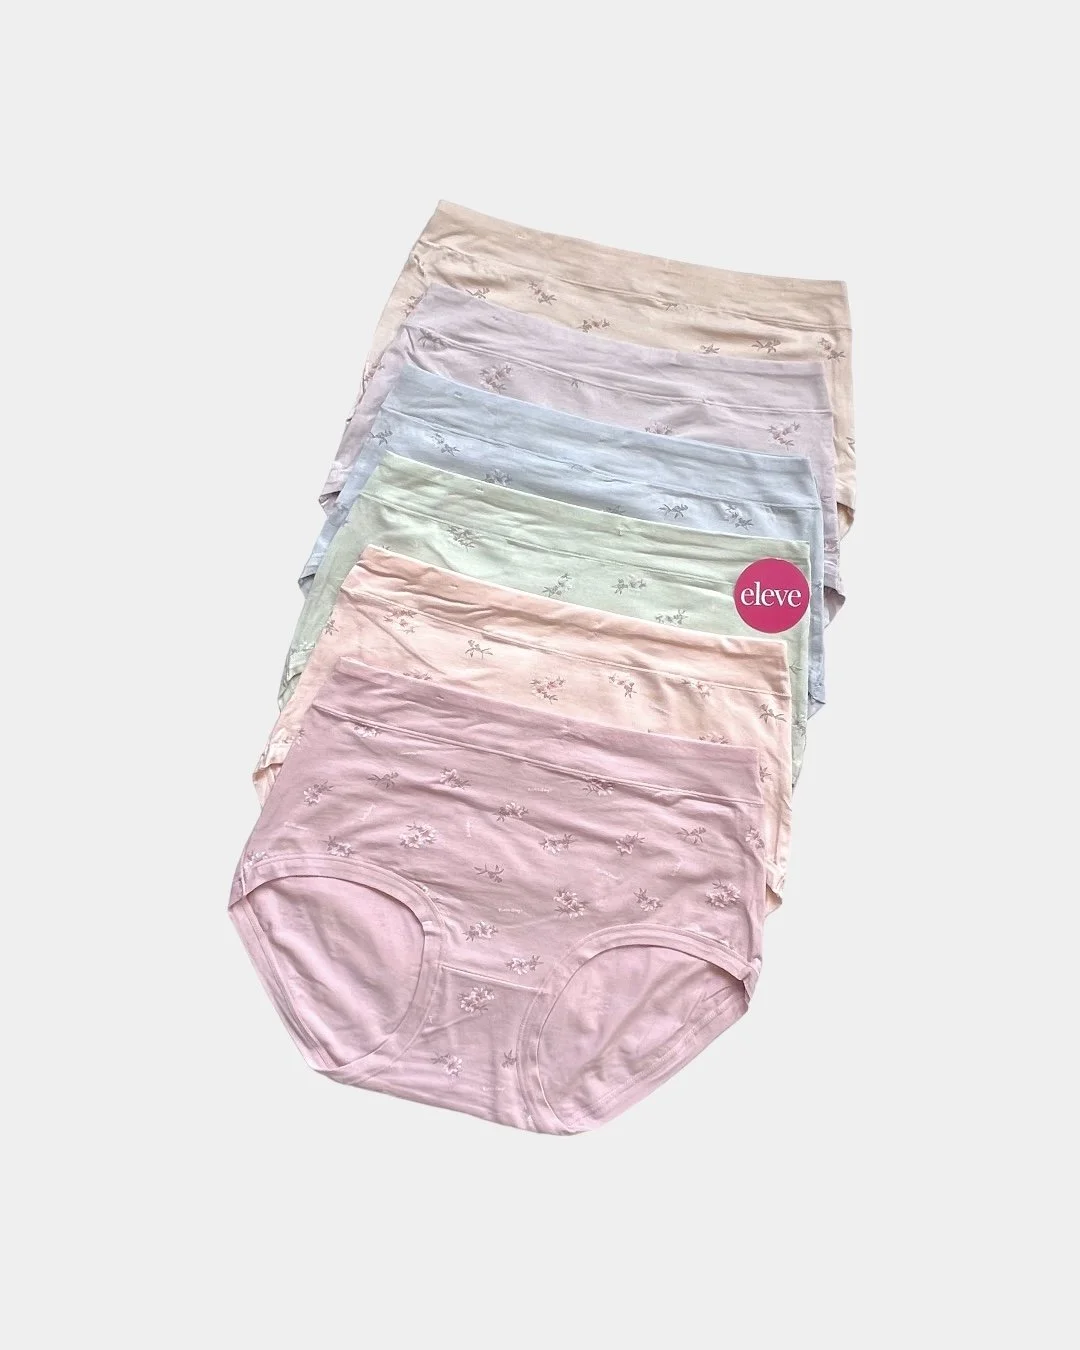 INNERSY Girls Cotton Underwear Teen Comfortable Nepal